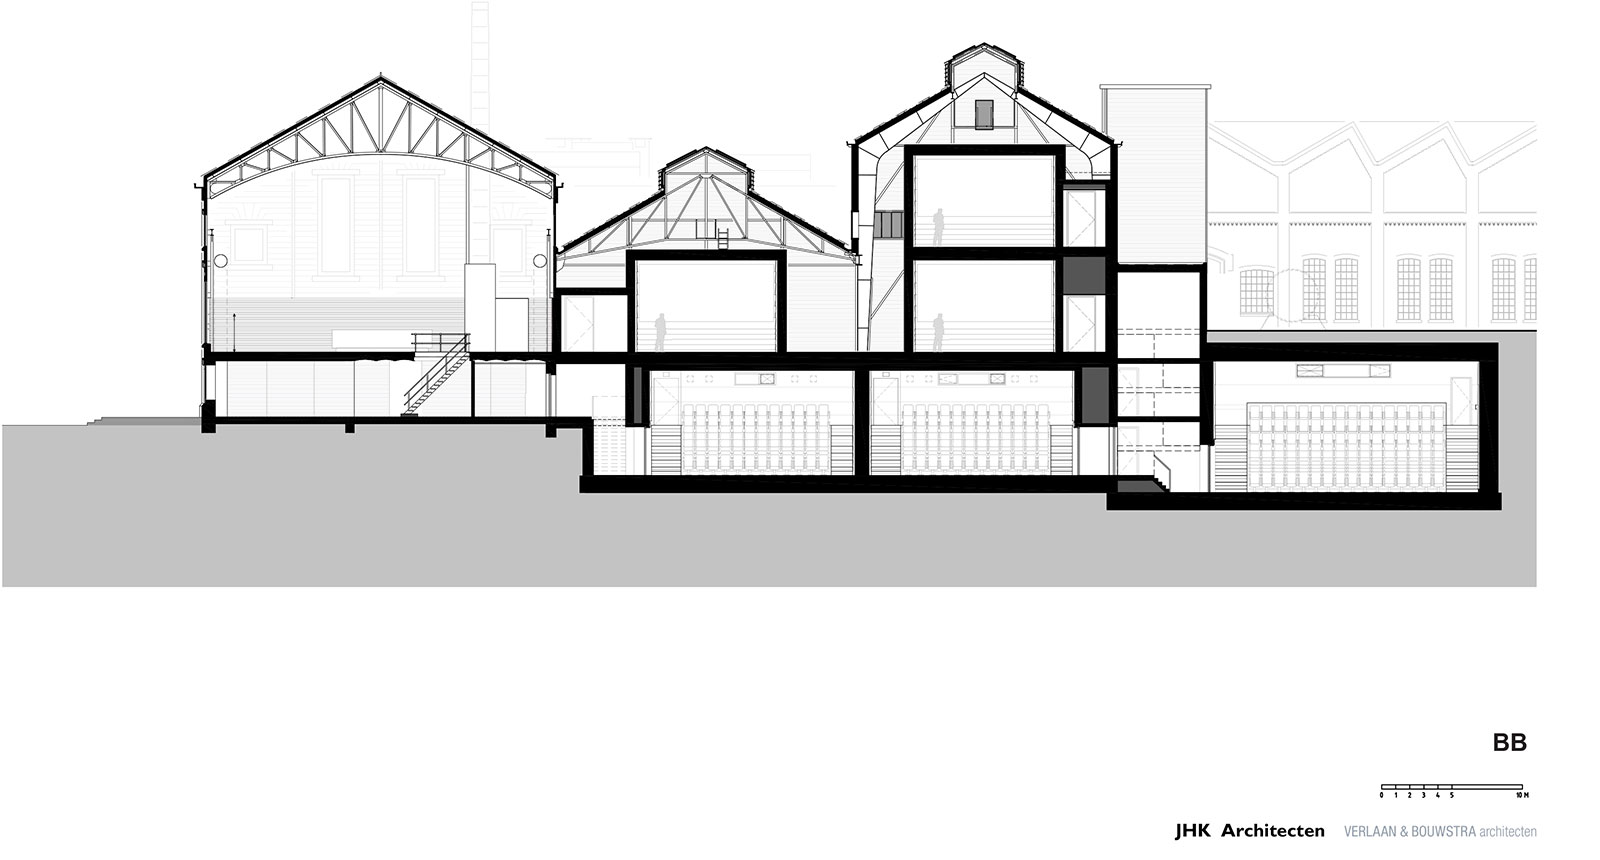 JHK Architecten Lumiere Cinema floorplans and sections 4